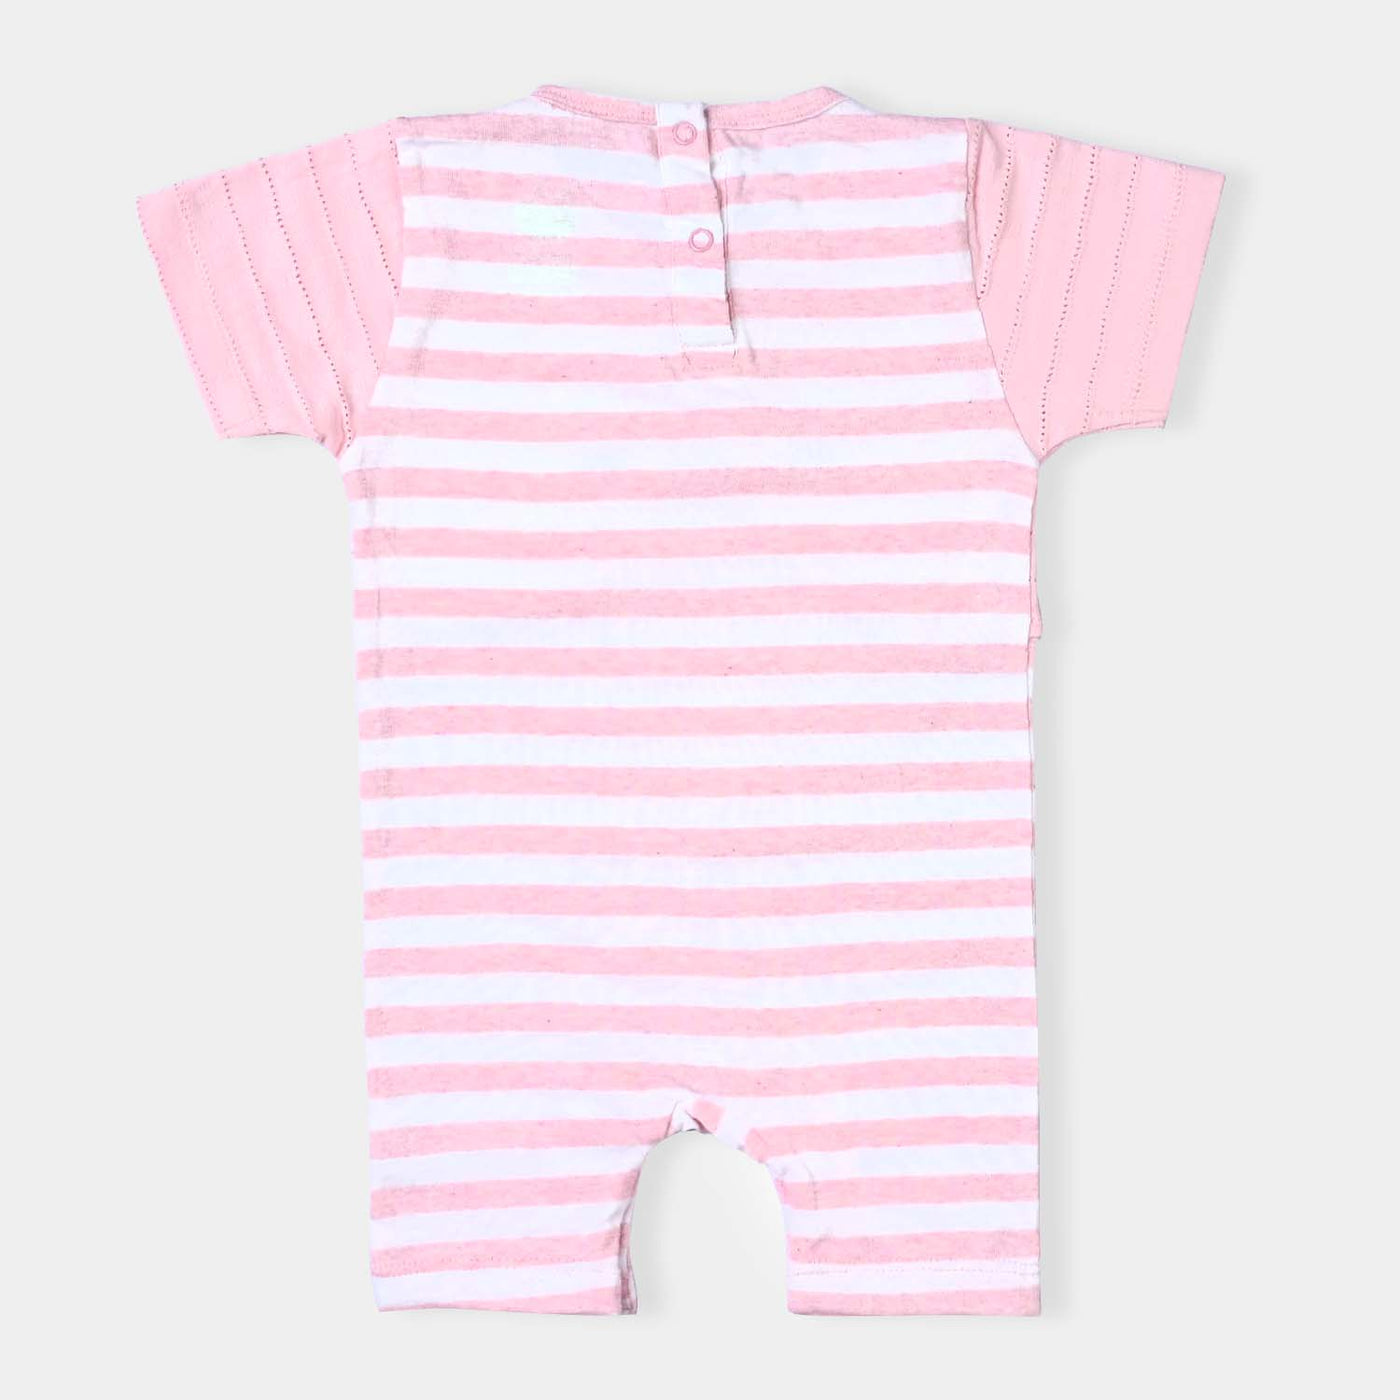 Infant Girls Cotton Interlock Knitted Romper Cori Style-Baby Pink